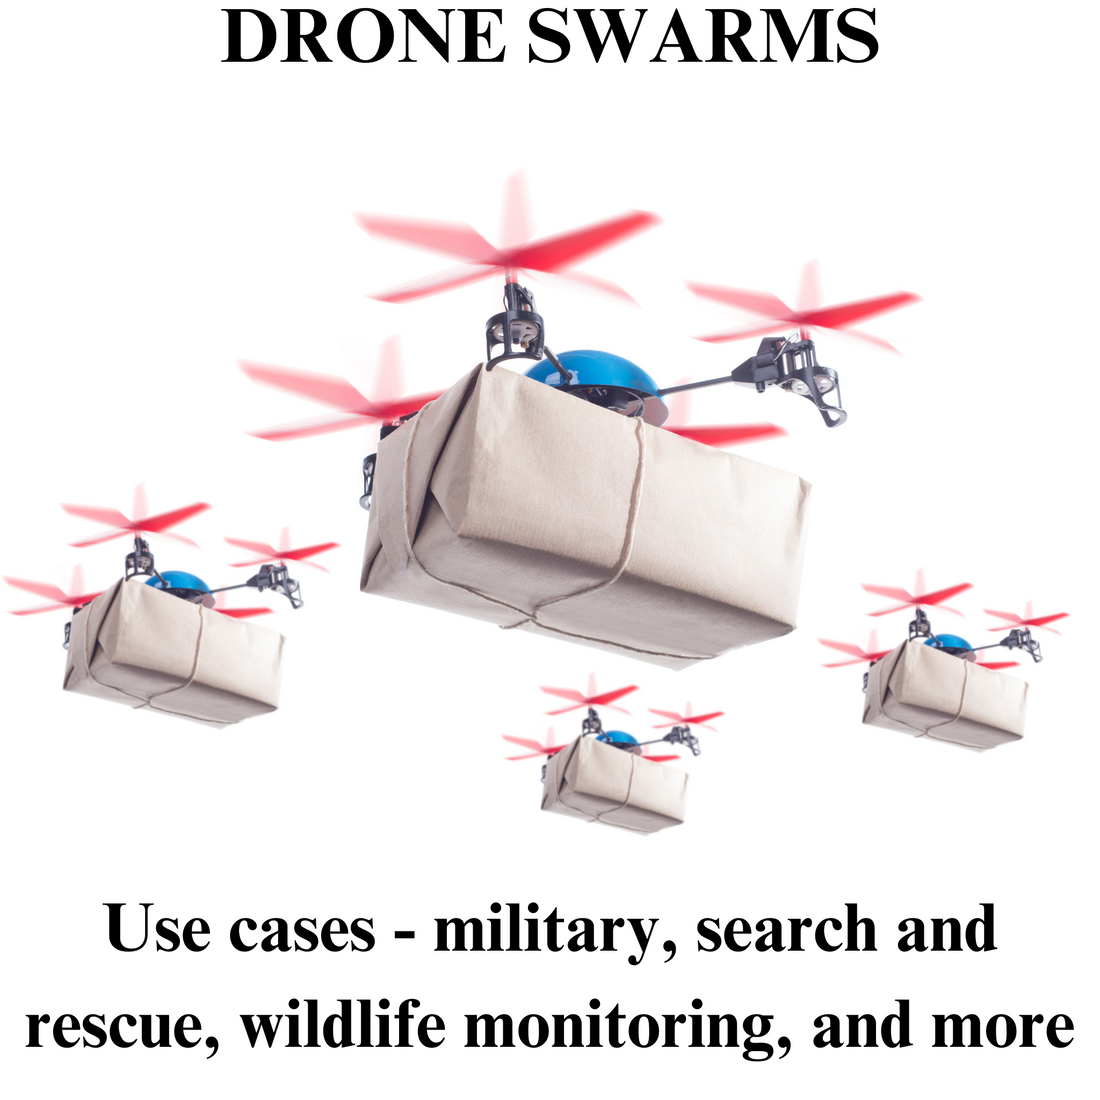 Drone swarms